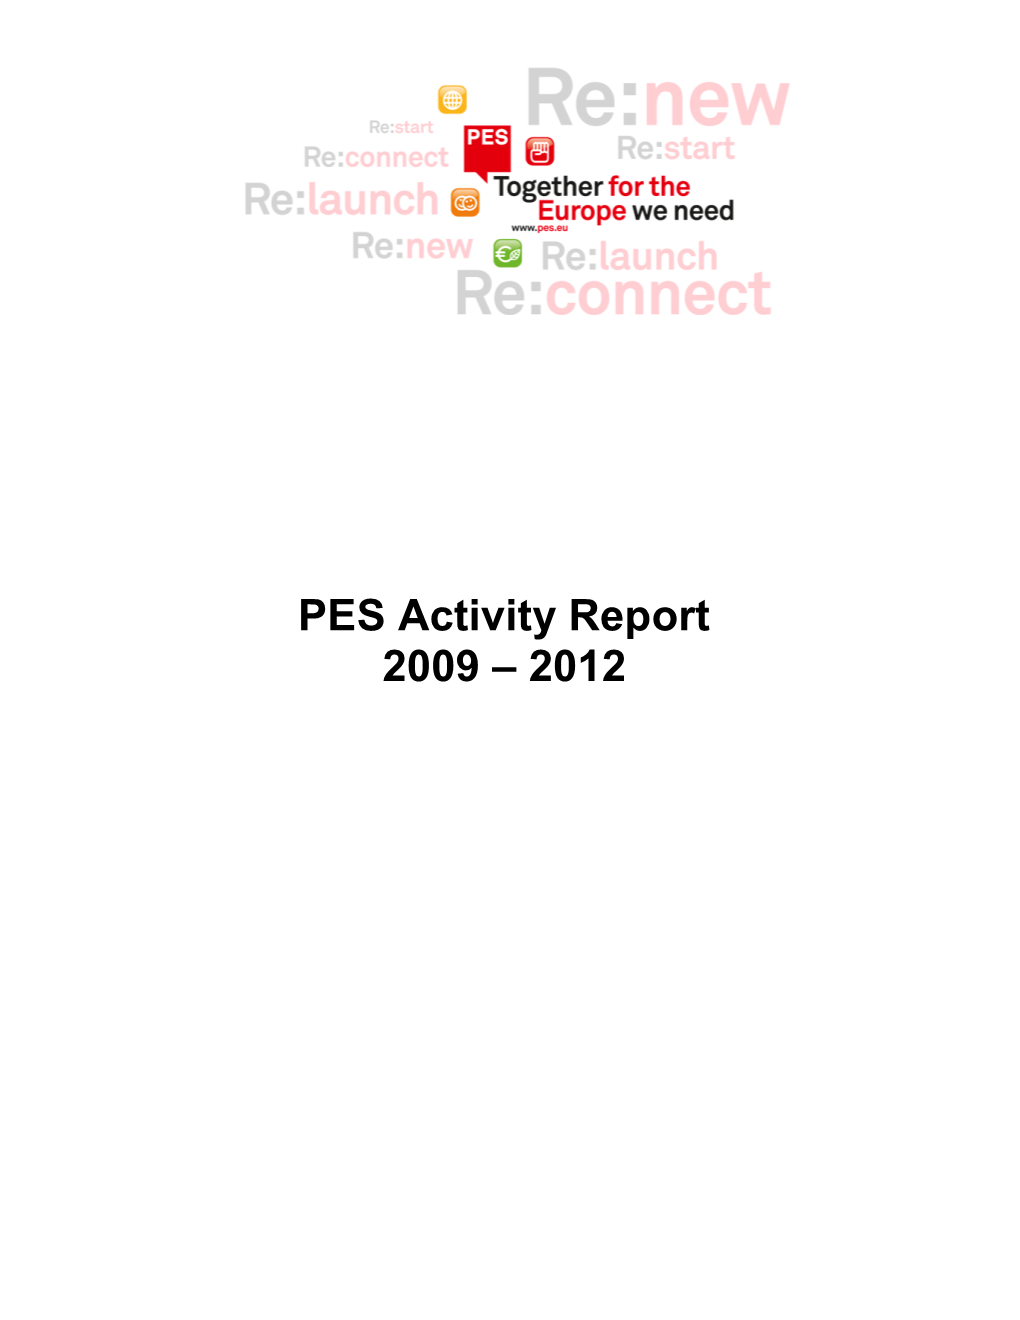 PES Activity Report 2009 – 2012